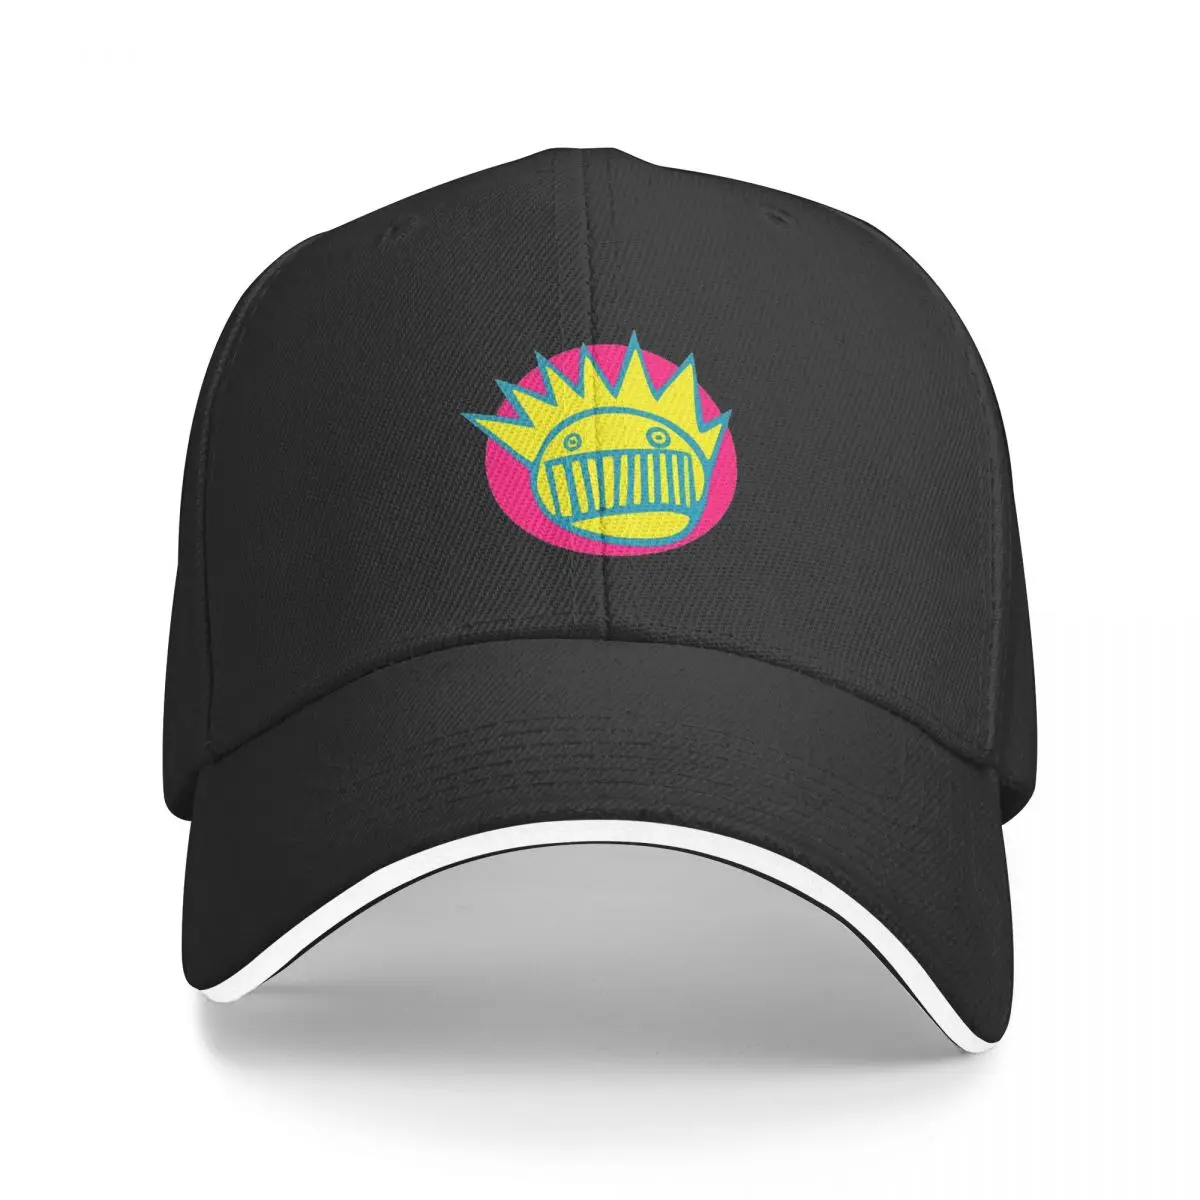 BEST SELLER - WeEn Merchandise Cap Fashion Casual Baseball Caps Adjustable Hat Hip Hop Summer Unisex Baseball Hats